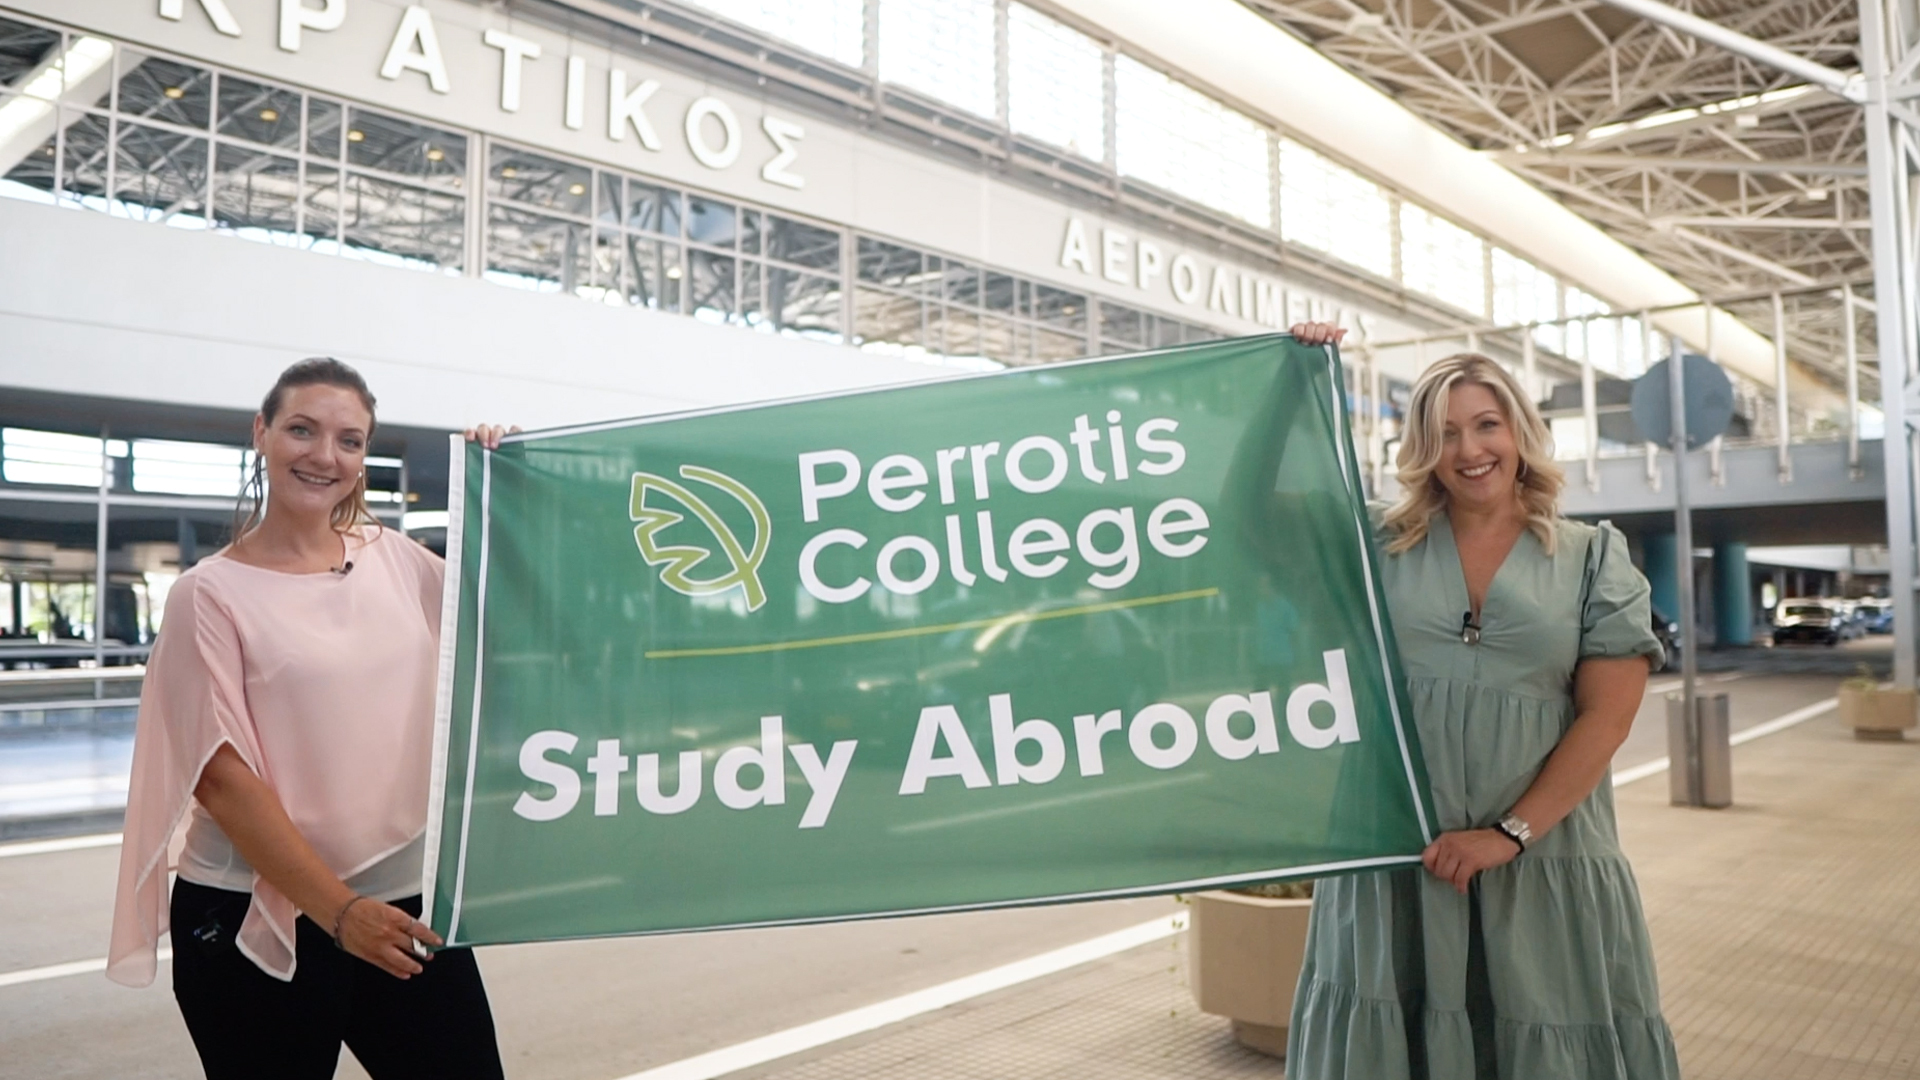 Perrotis College study abroad